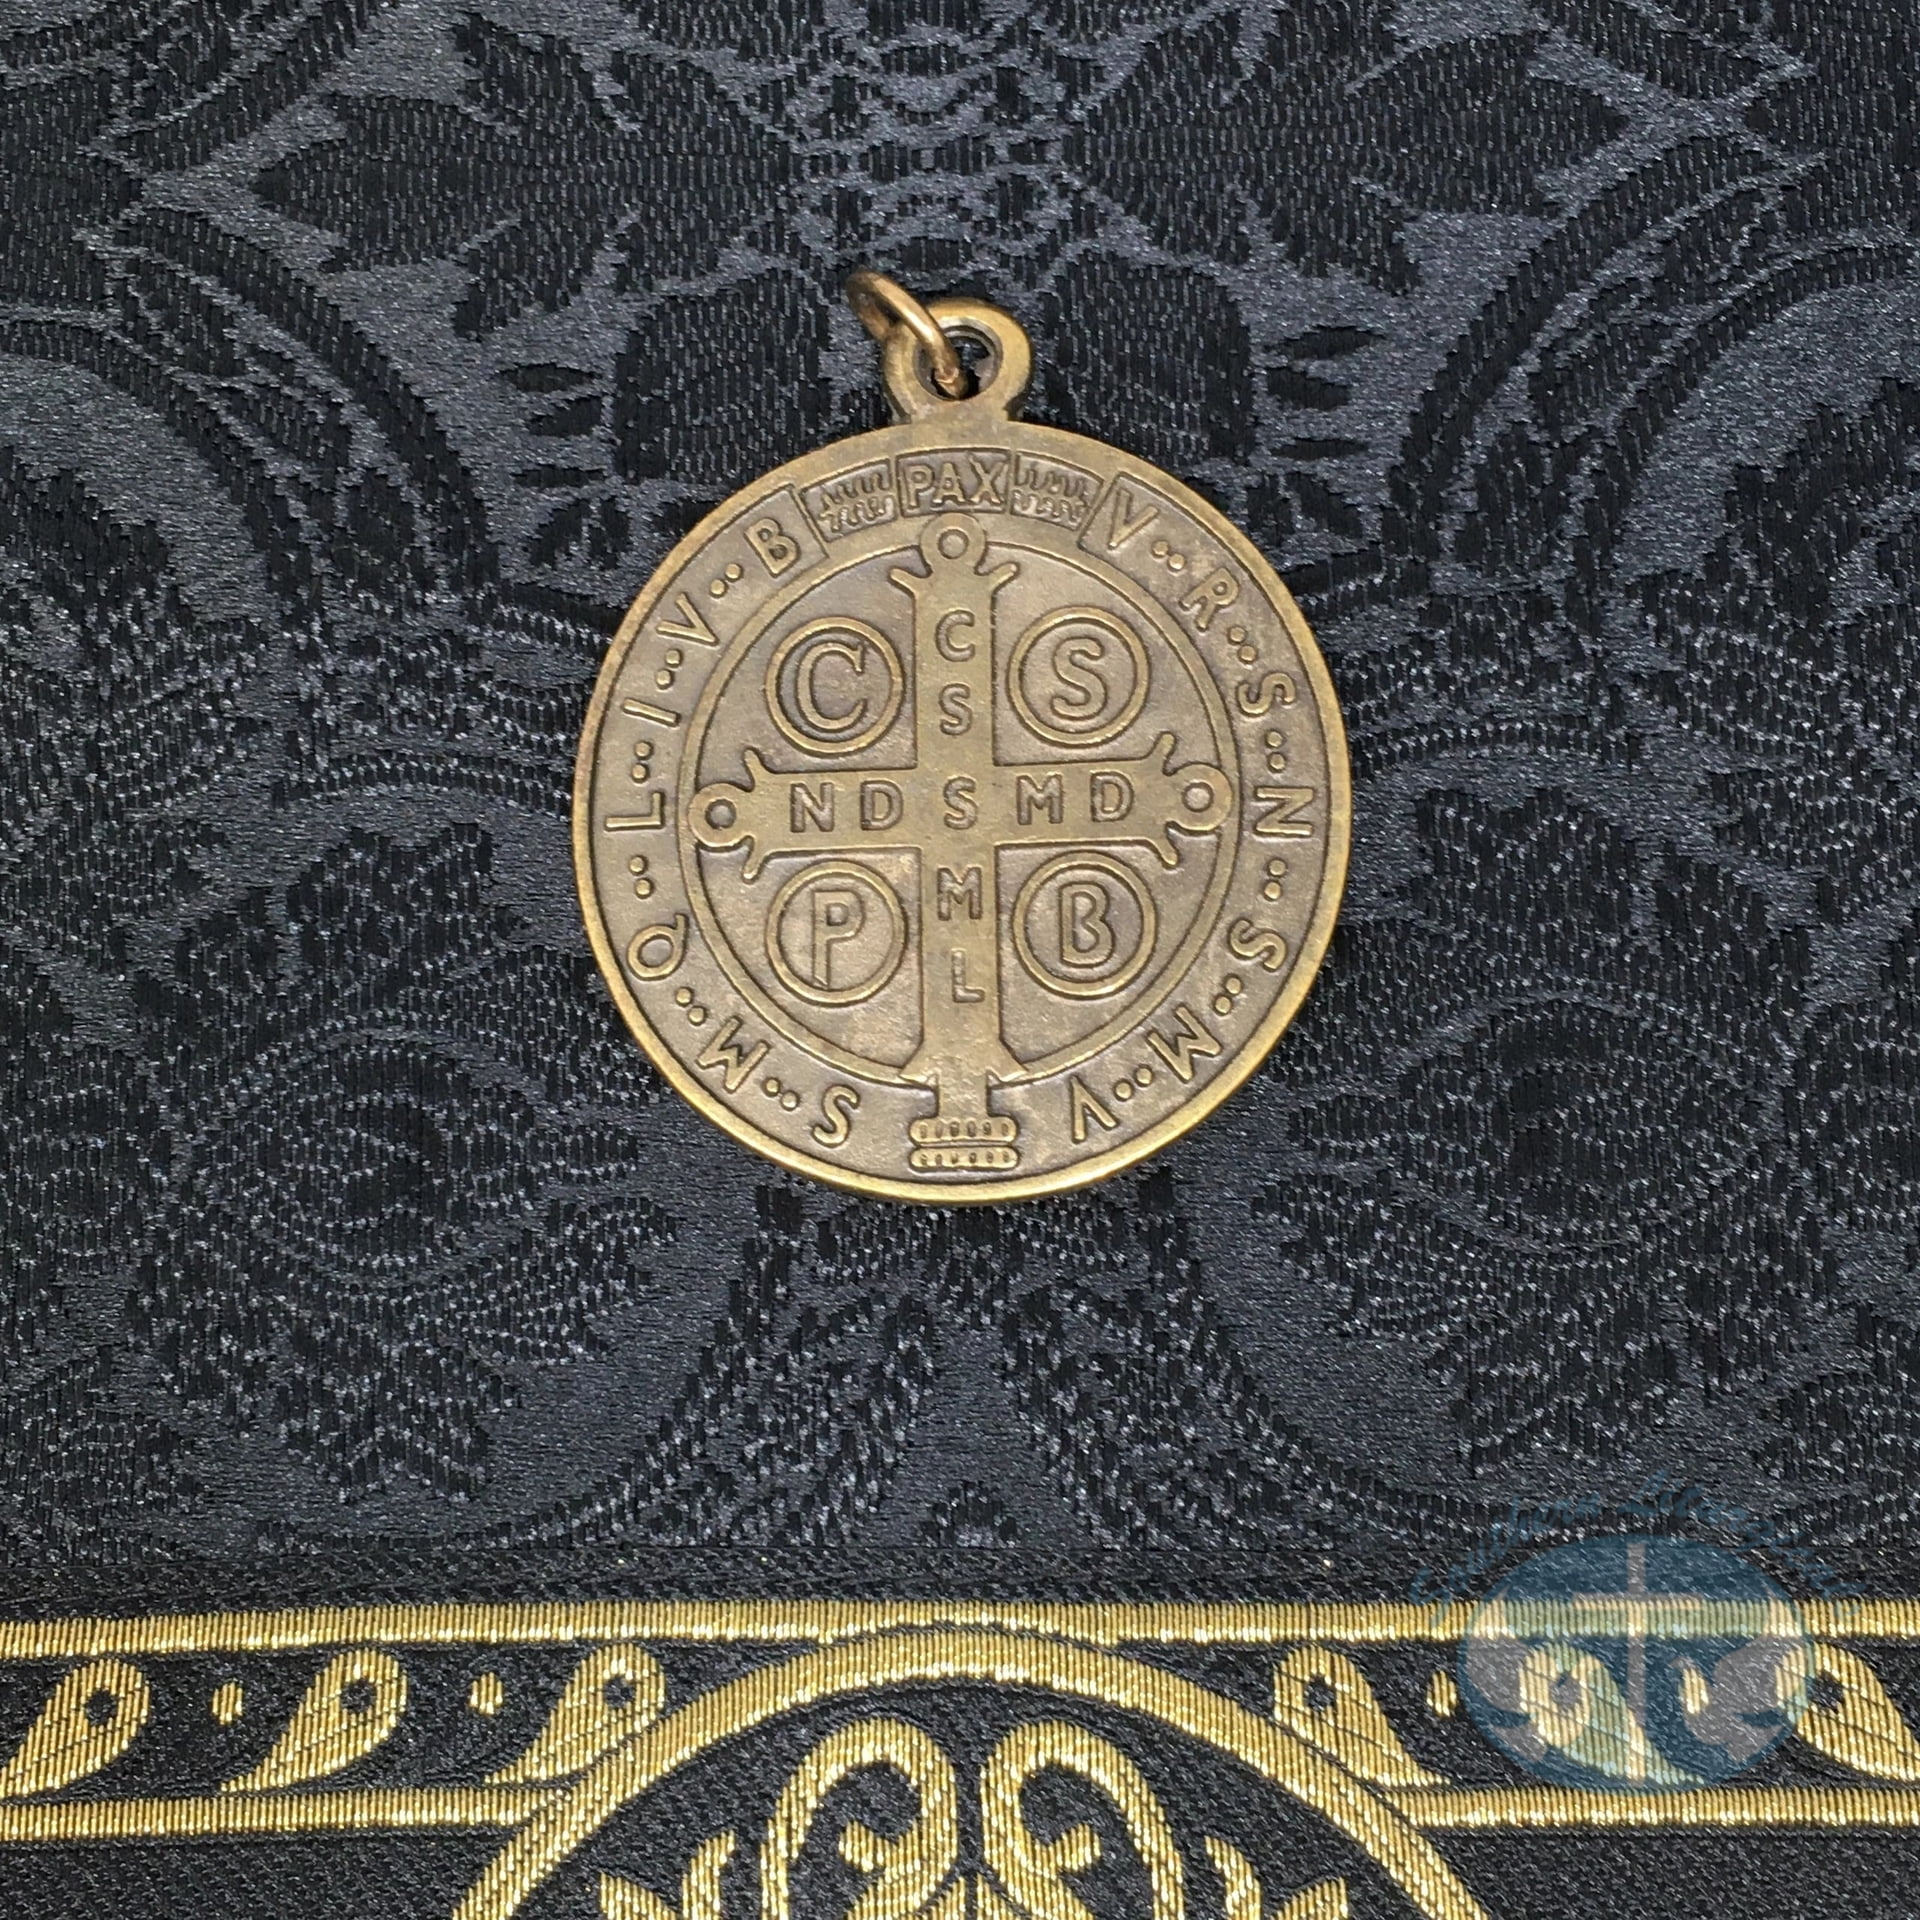 Vatican Imports Large Saint Benedict Medal - 2 Diameter (Antique Bronze)